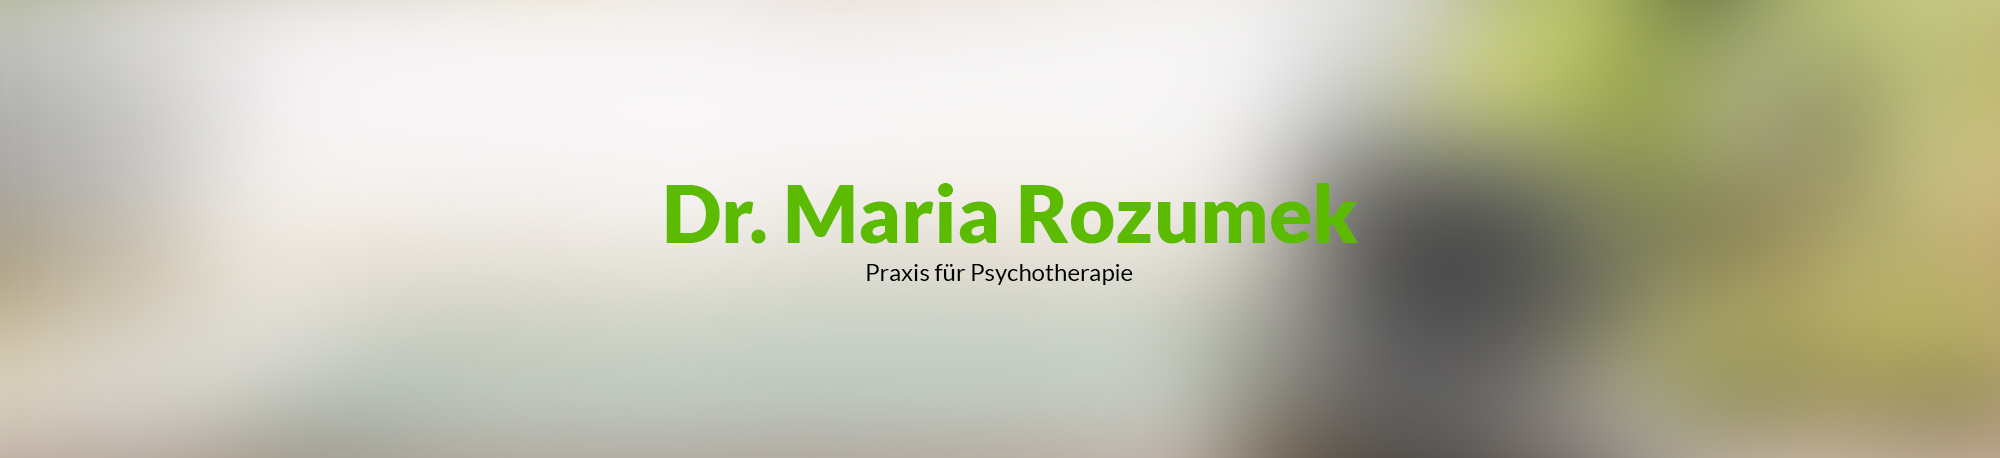 Dr. Maria Rozumek